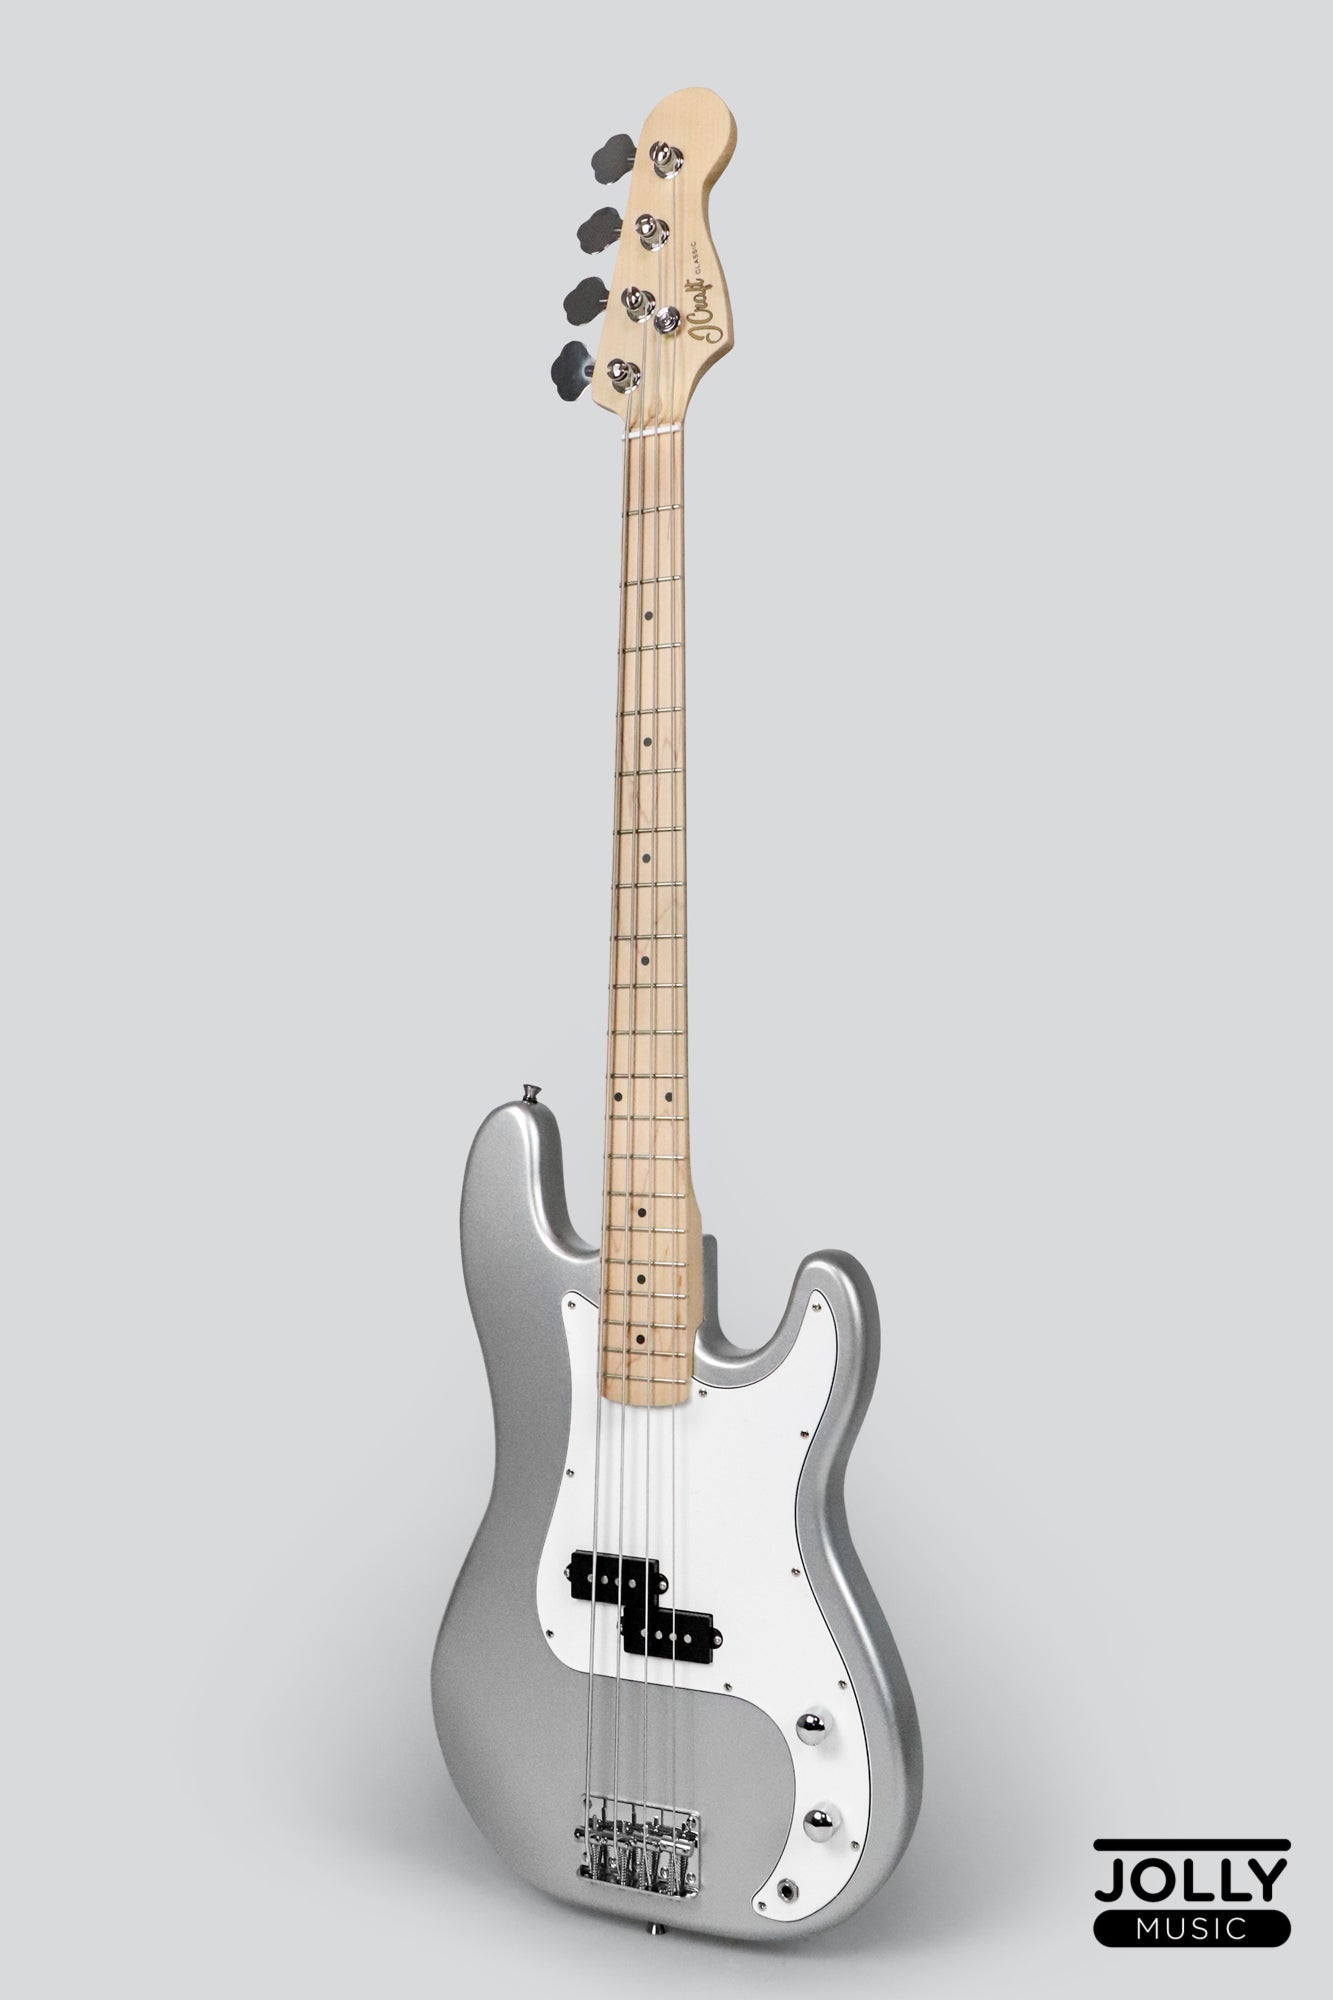 JCraft PB-1 4-String Electric Bass Guitar with Gigbag - Silver Sky